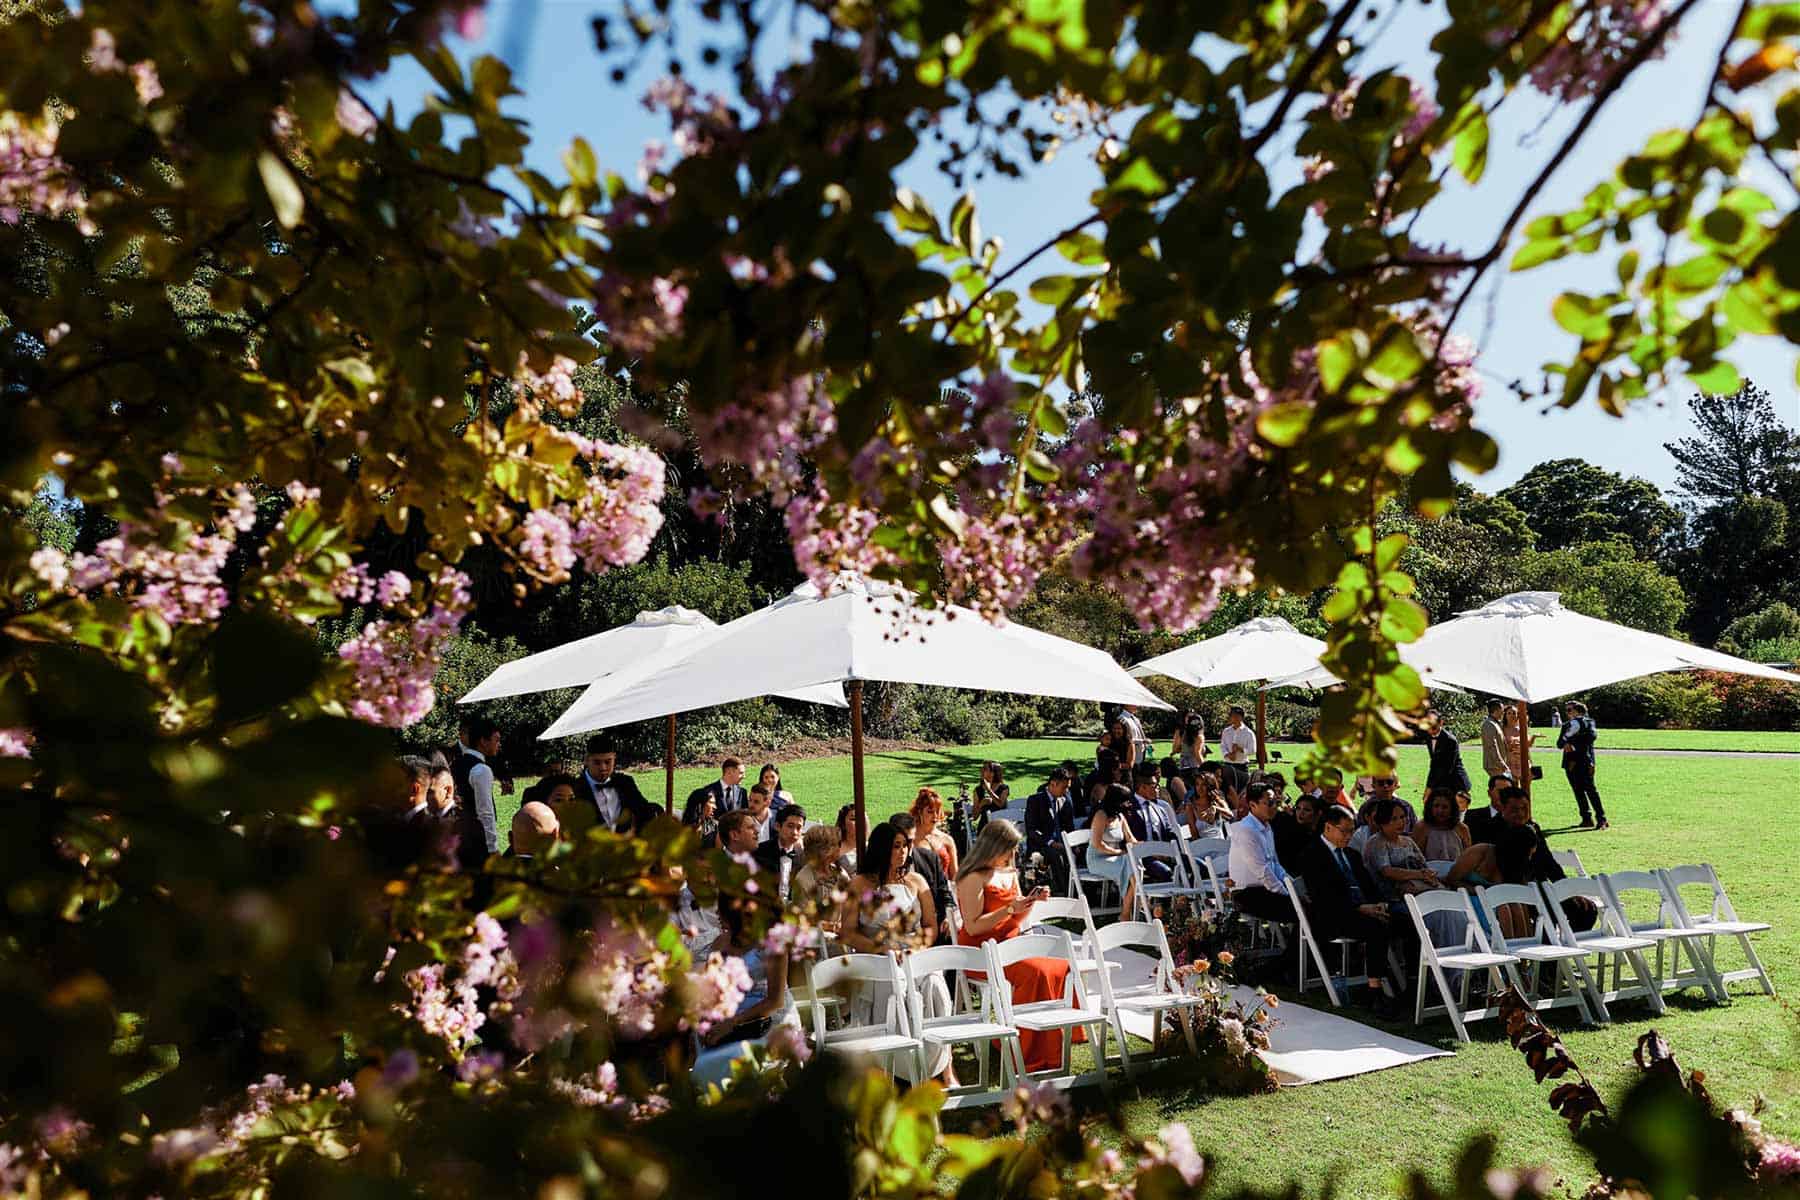 chic Melbourne wedding at Botanic Gardens - photography by Eric Ronald 